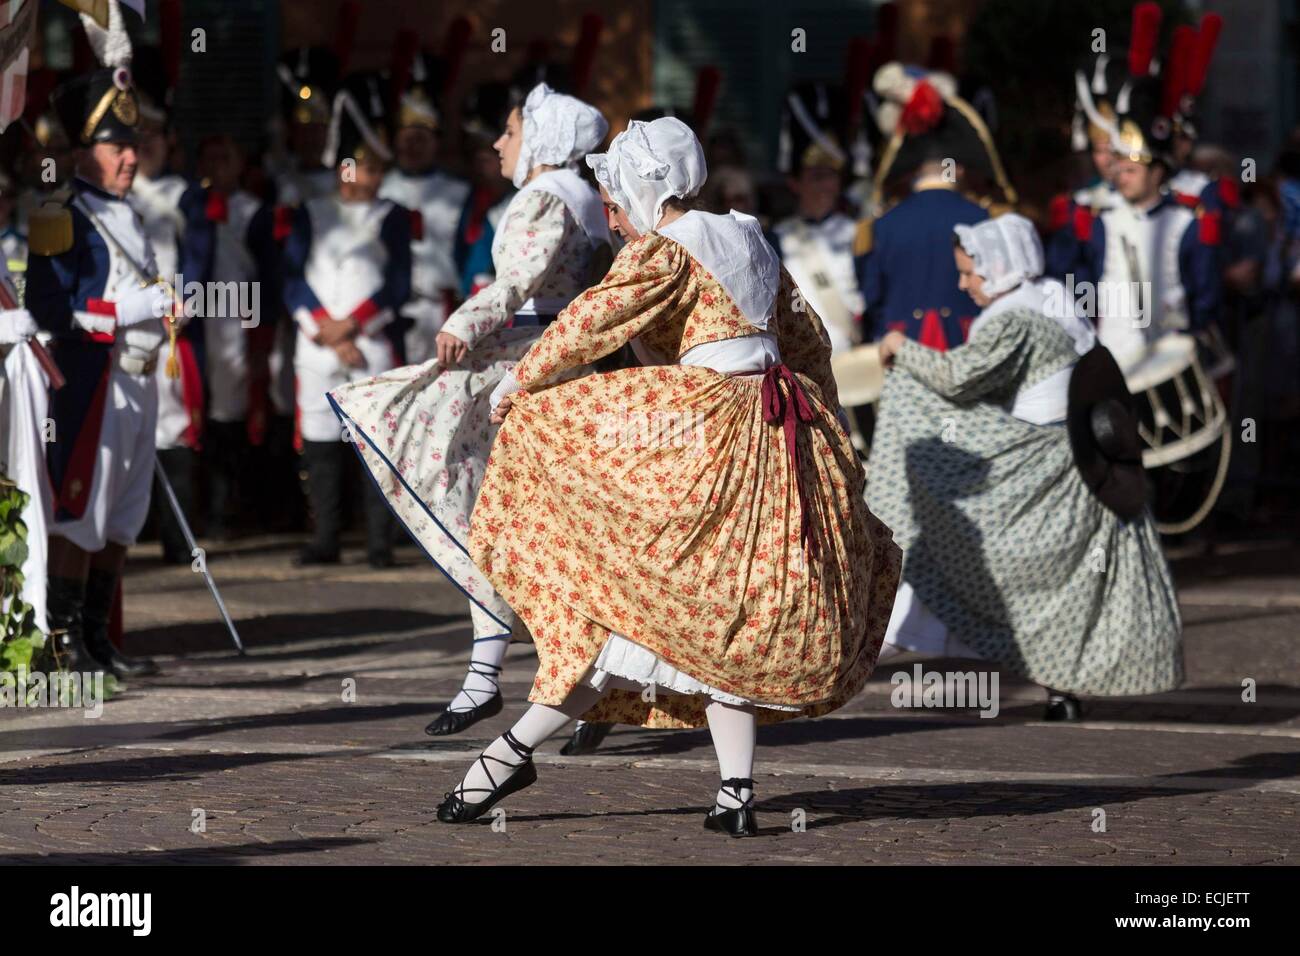 France, Var, Frejus, La Bravade, traditional festival in honor of the arrival of Saint Francois de Paule in the city, provencal traditional dance Stock Photo